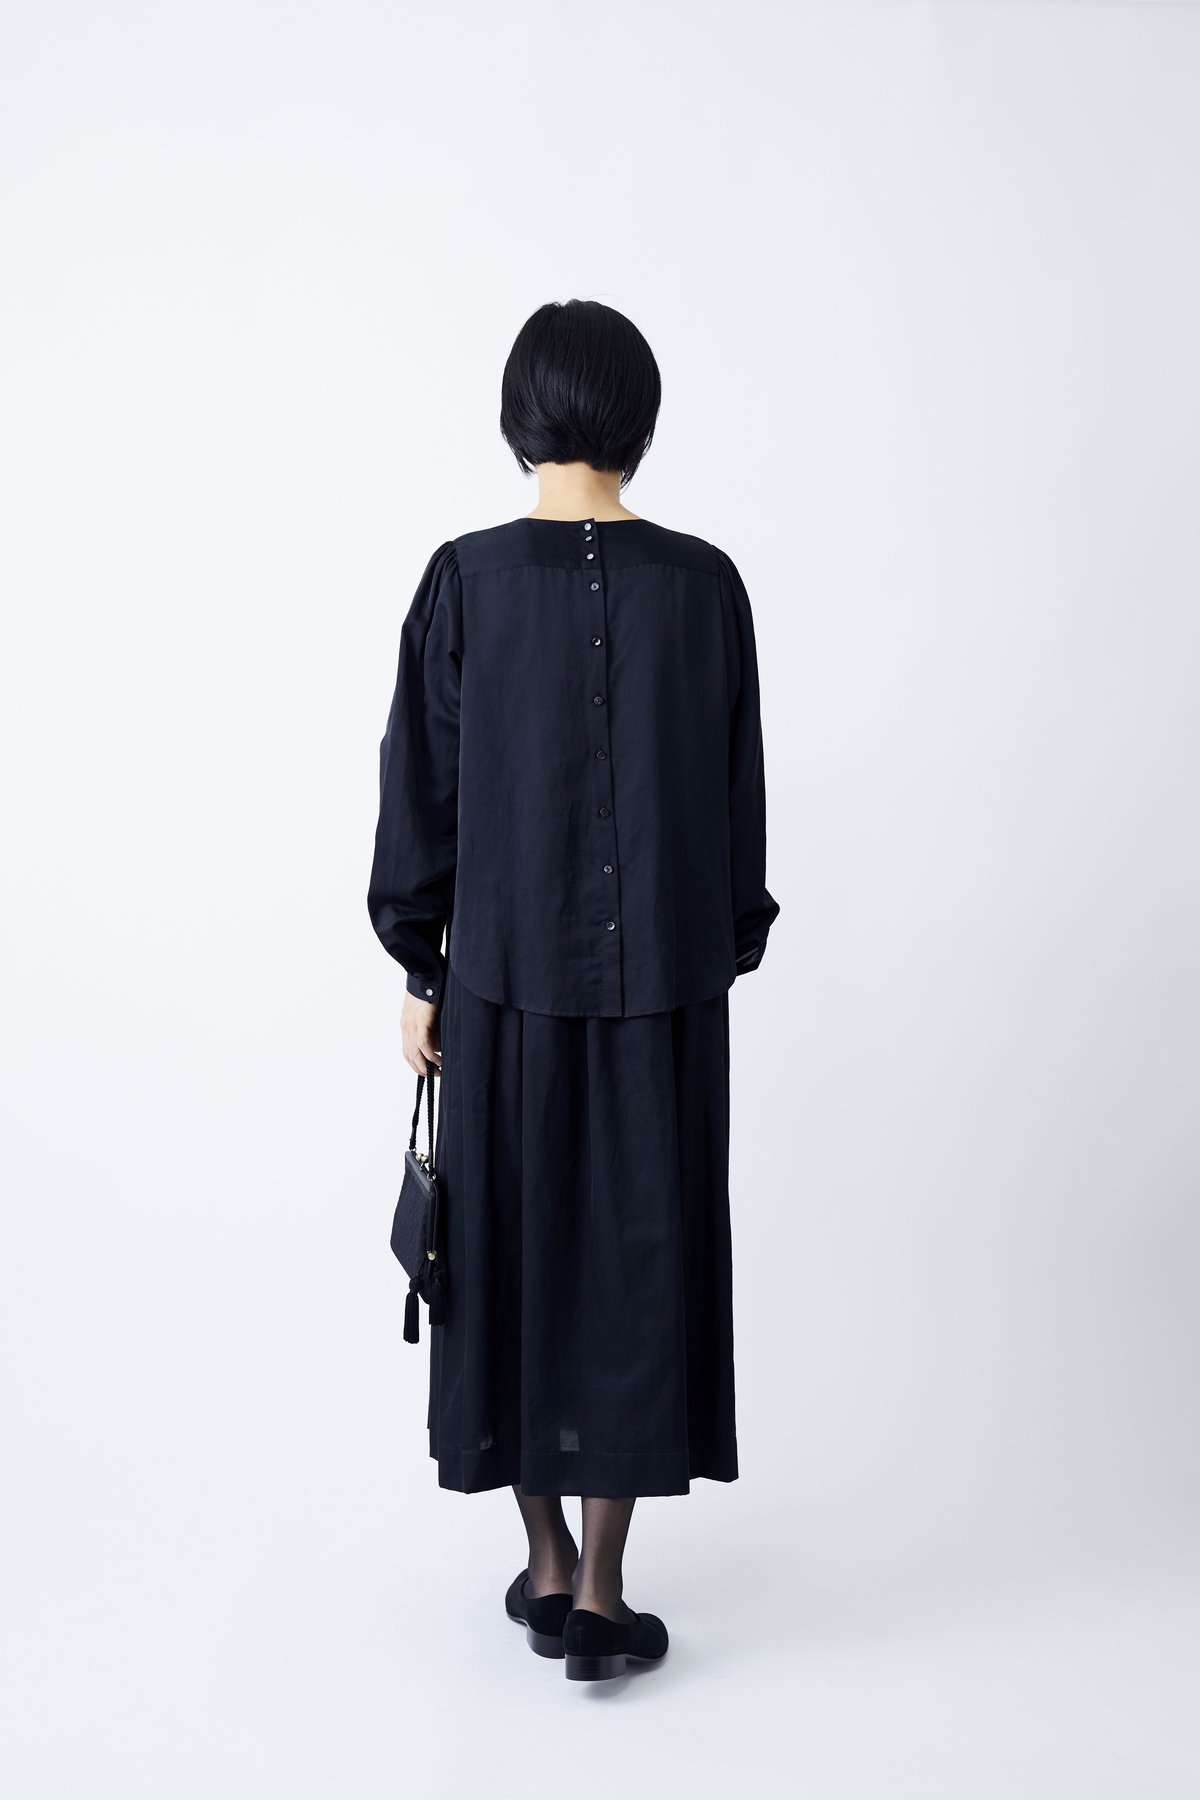 19006 / Layered Dress | shuo